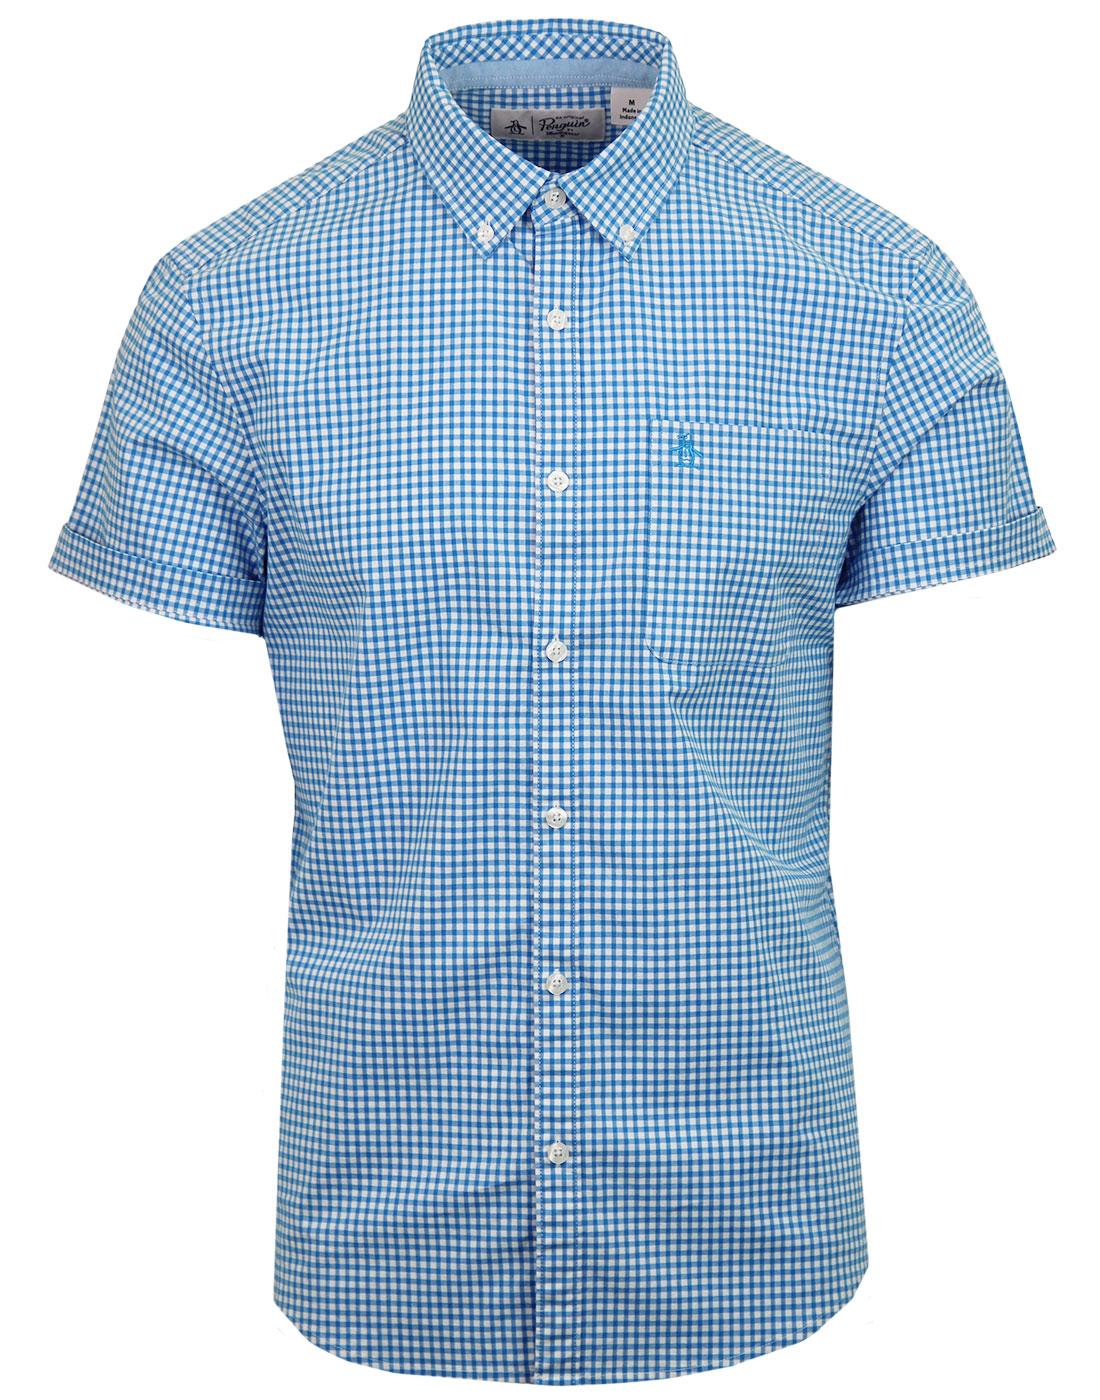 ORIGINAL PENGUIN Mod Short Sleeve Gingham Shirt in Blue